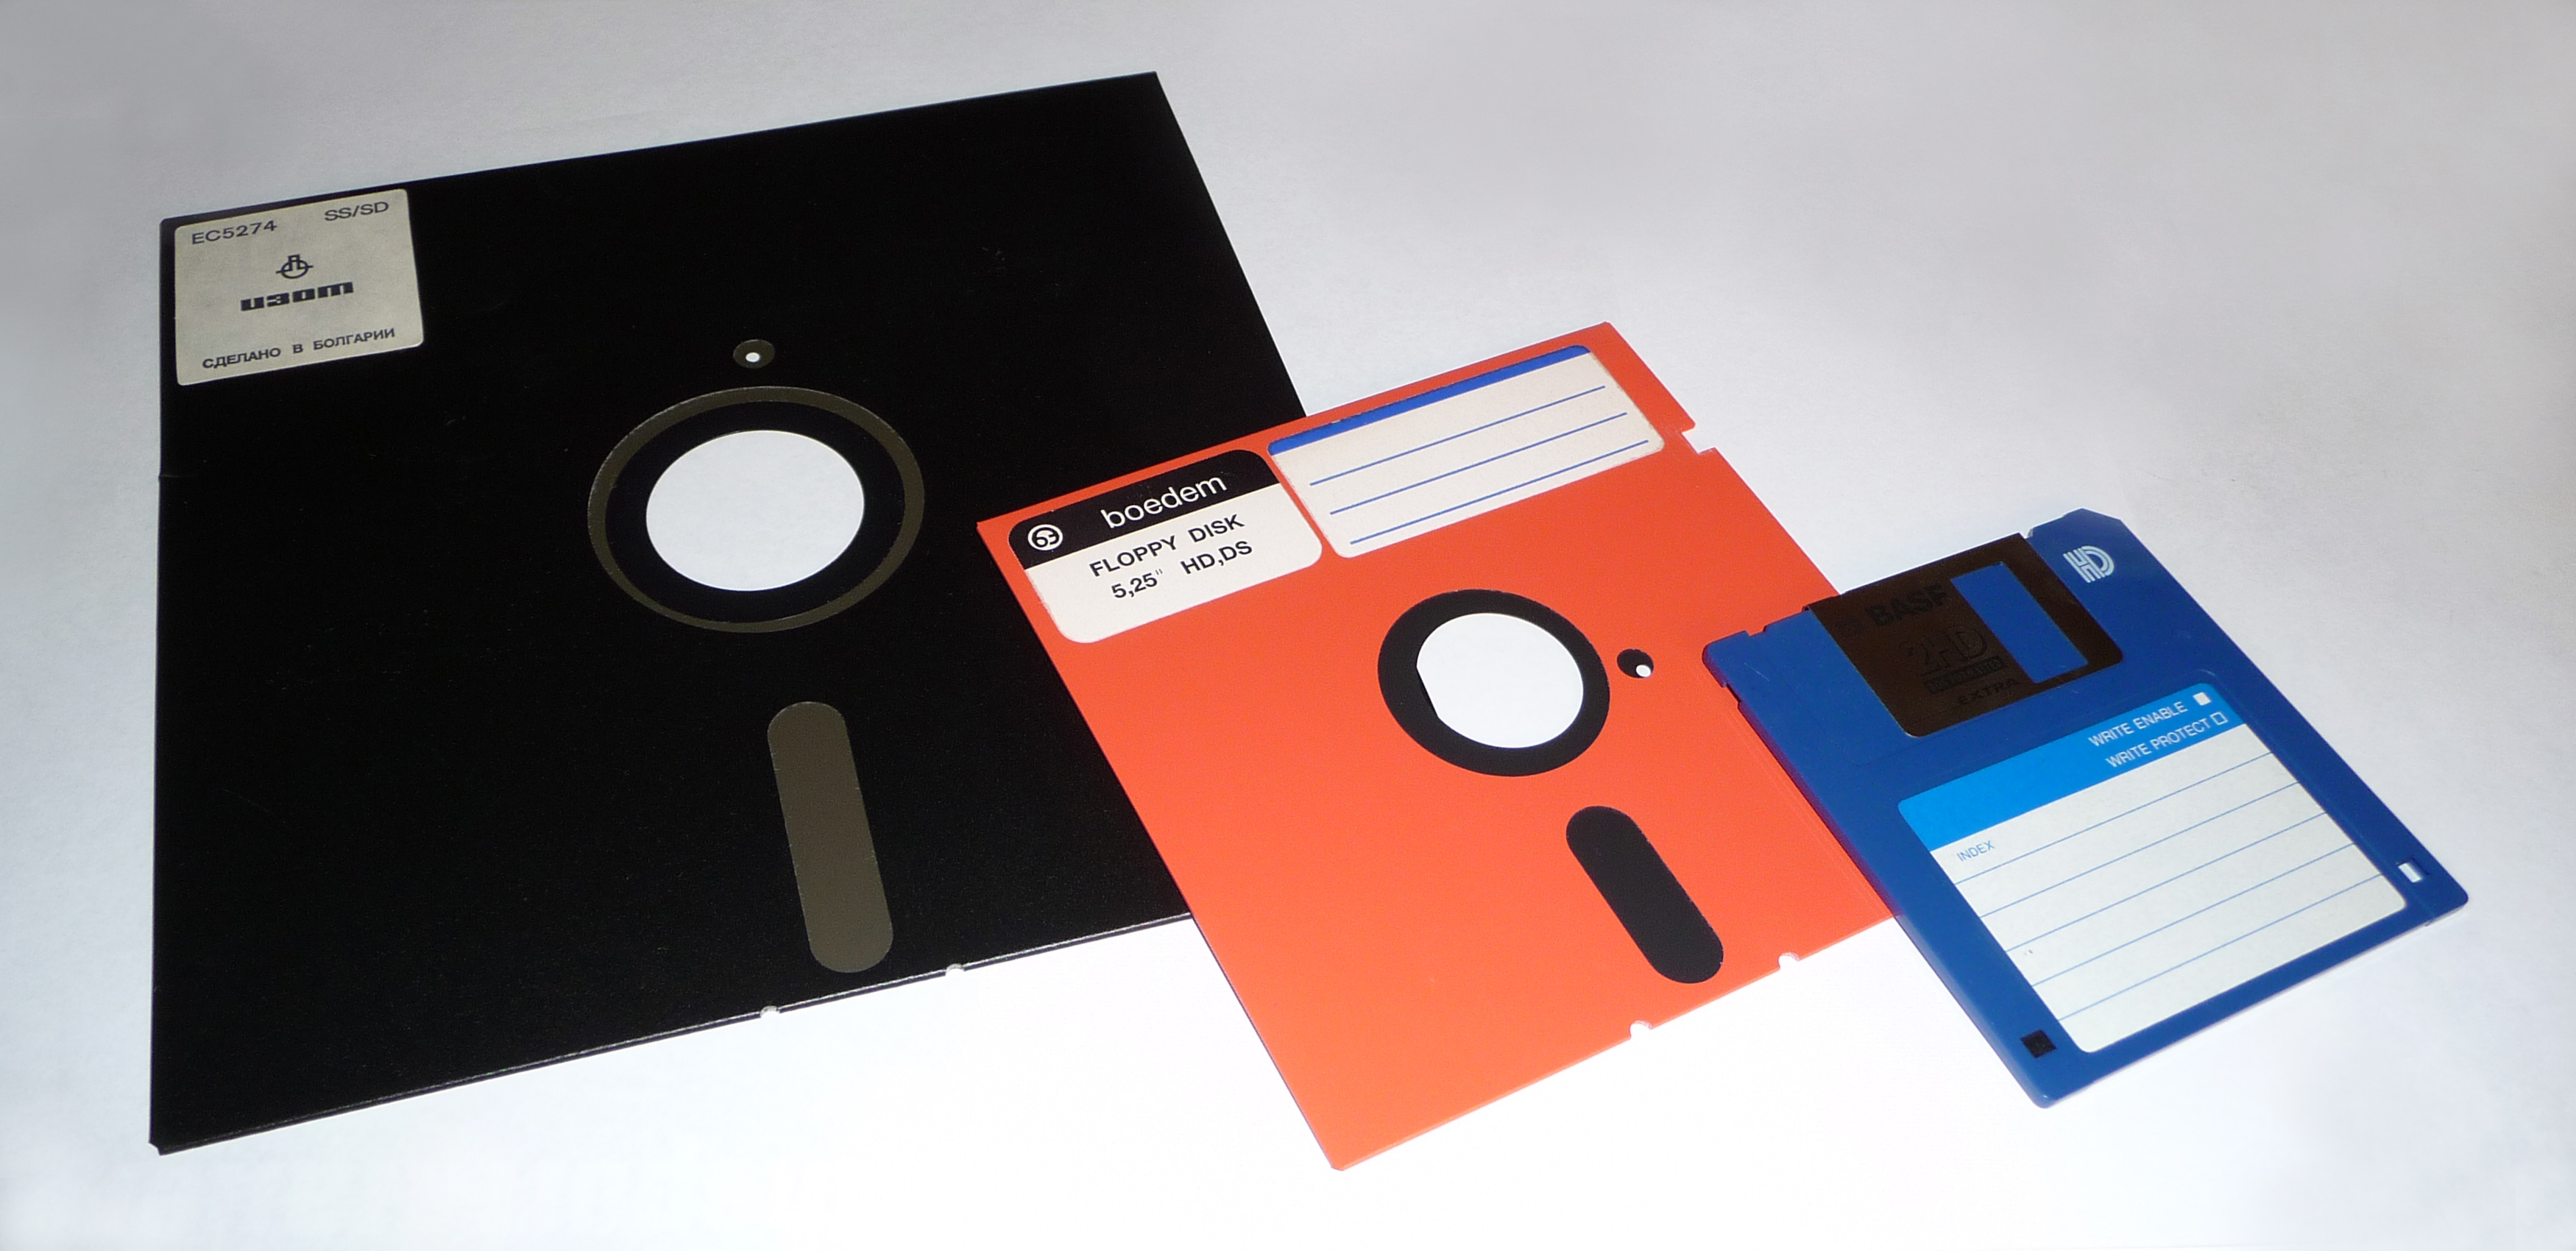 Floppy disk - Wikipedia